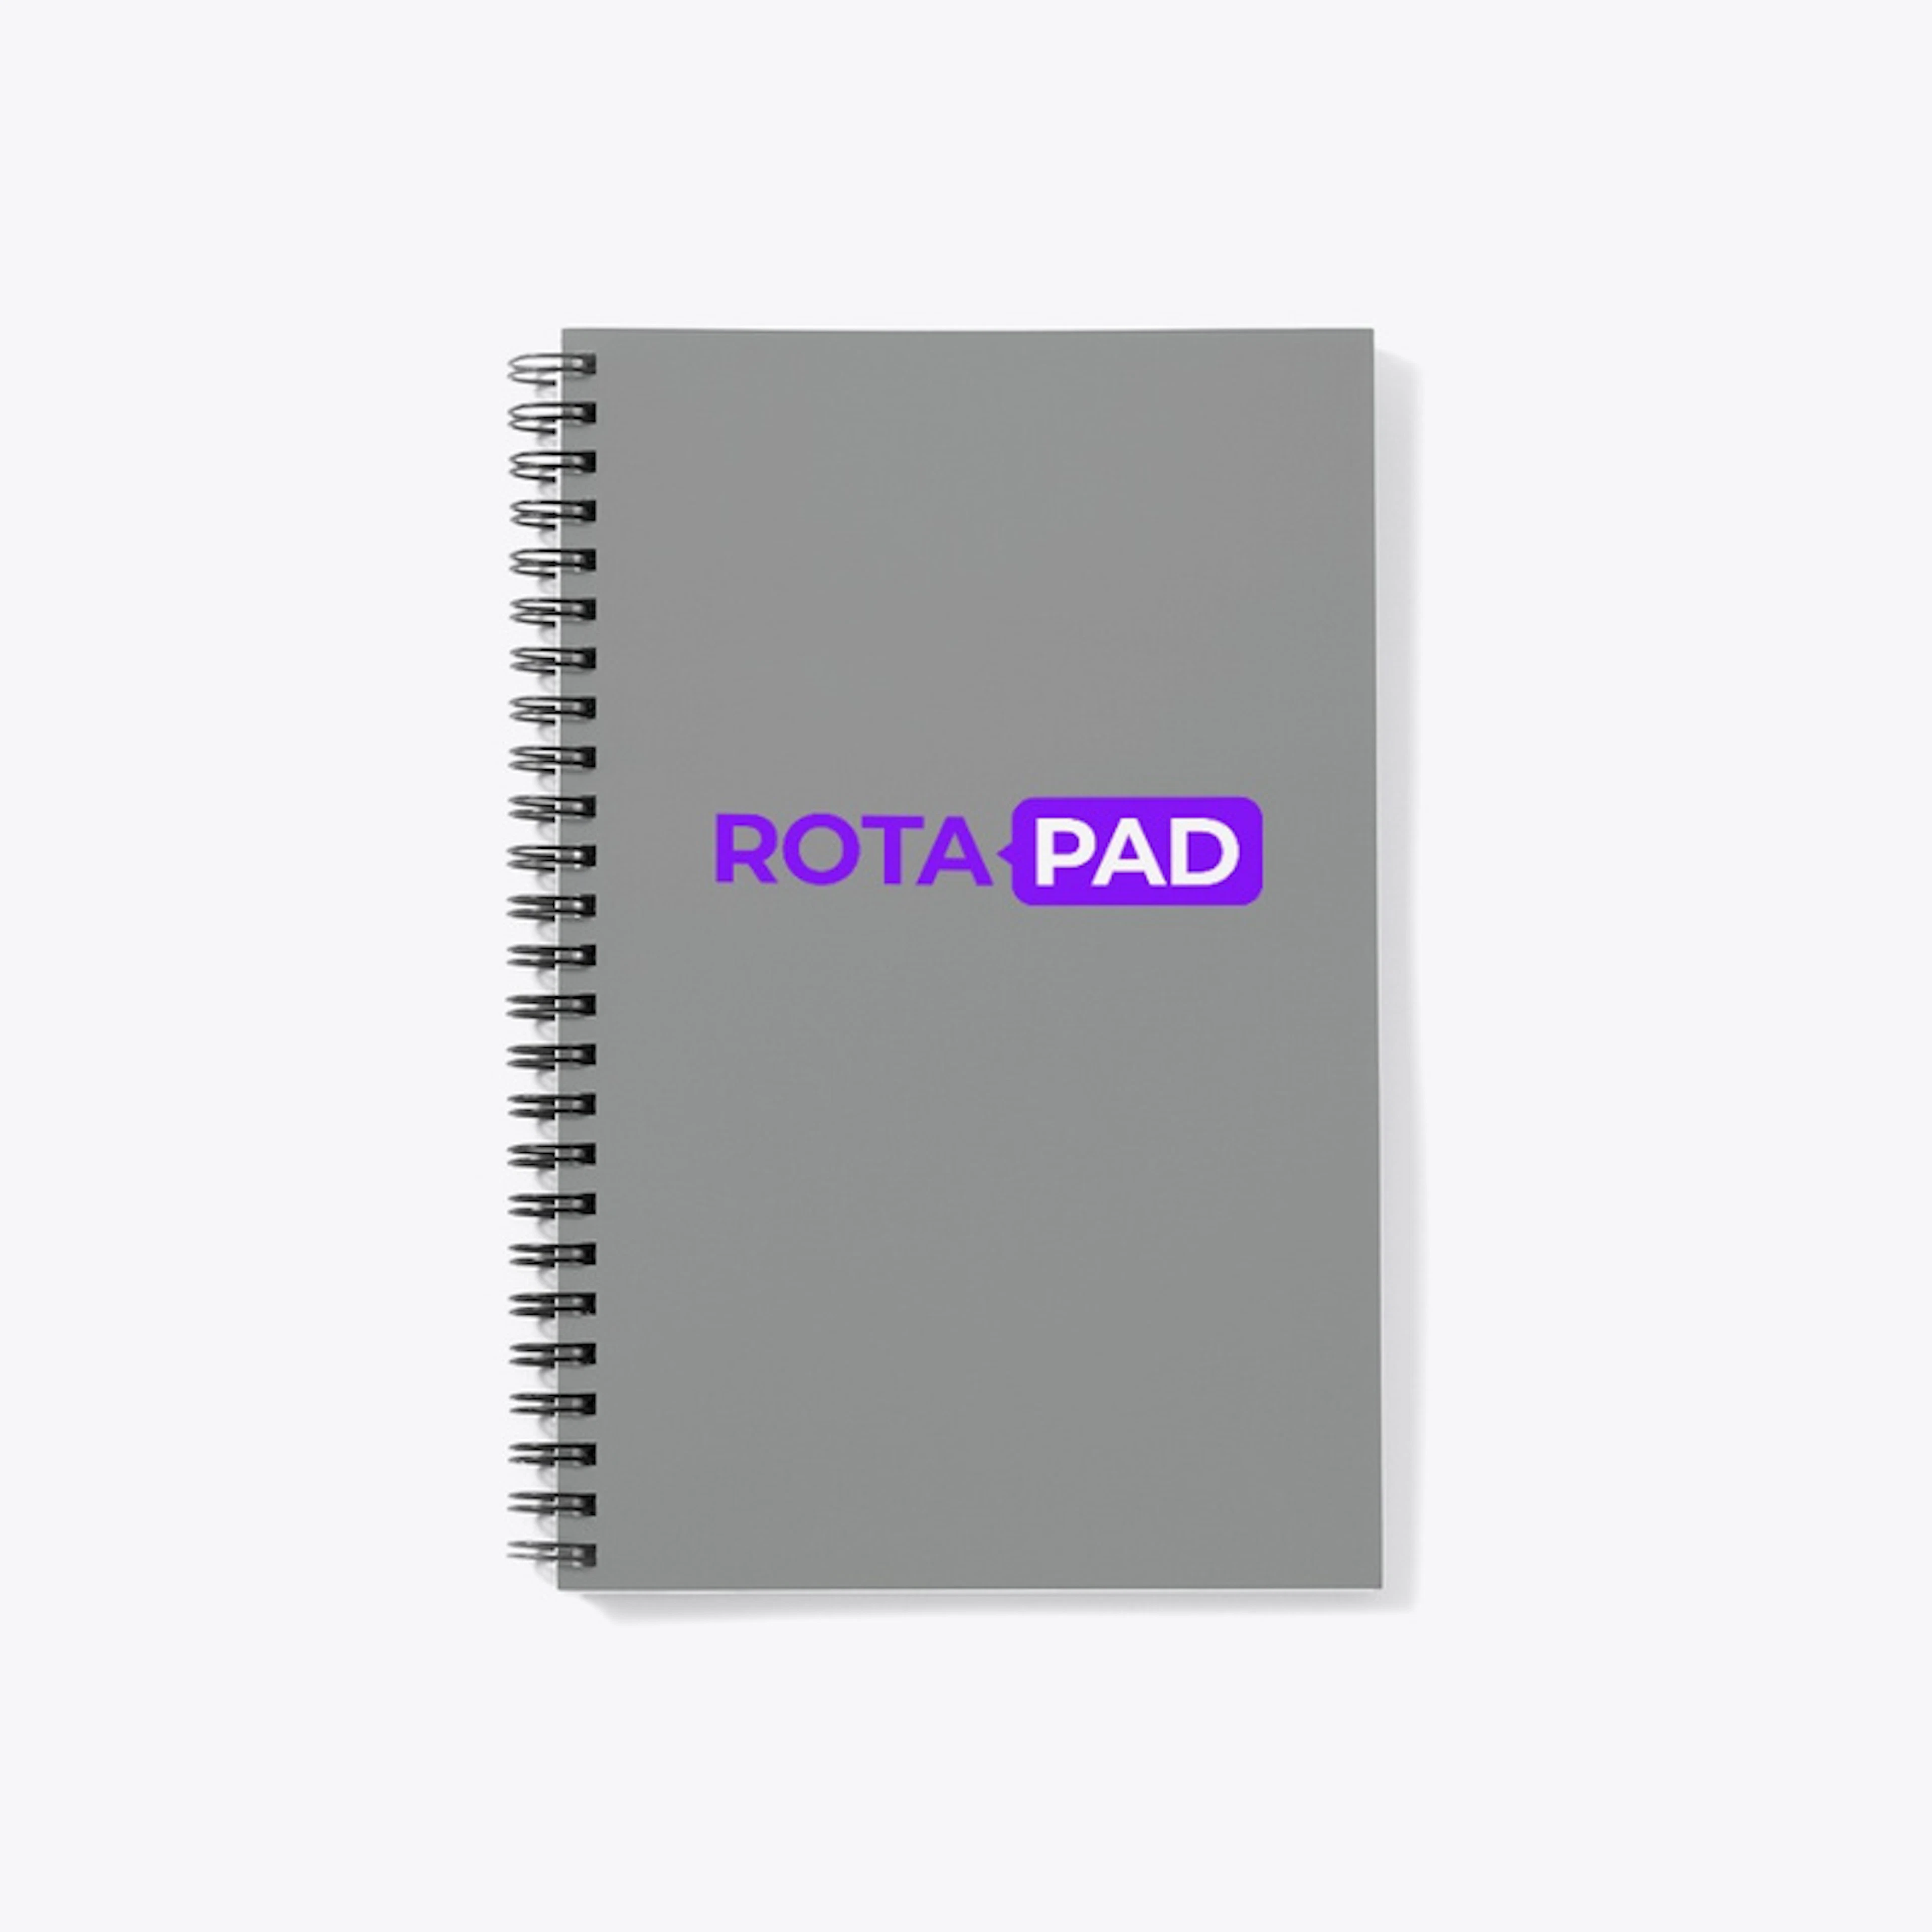 RotaPad